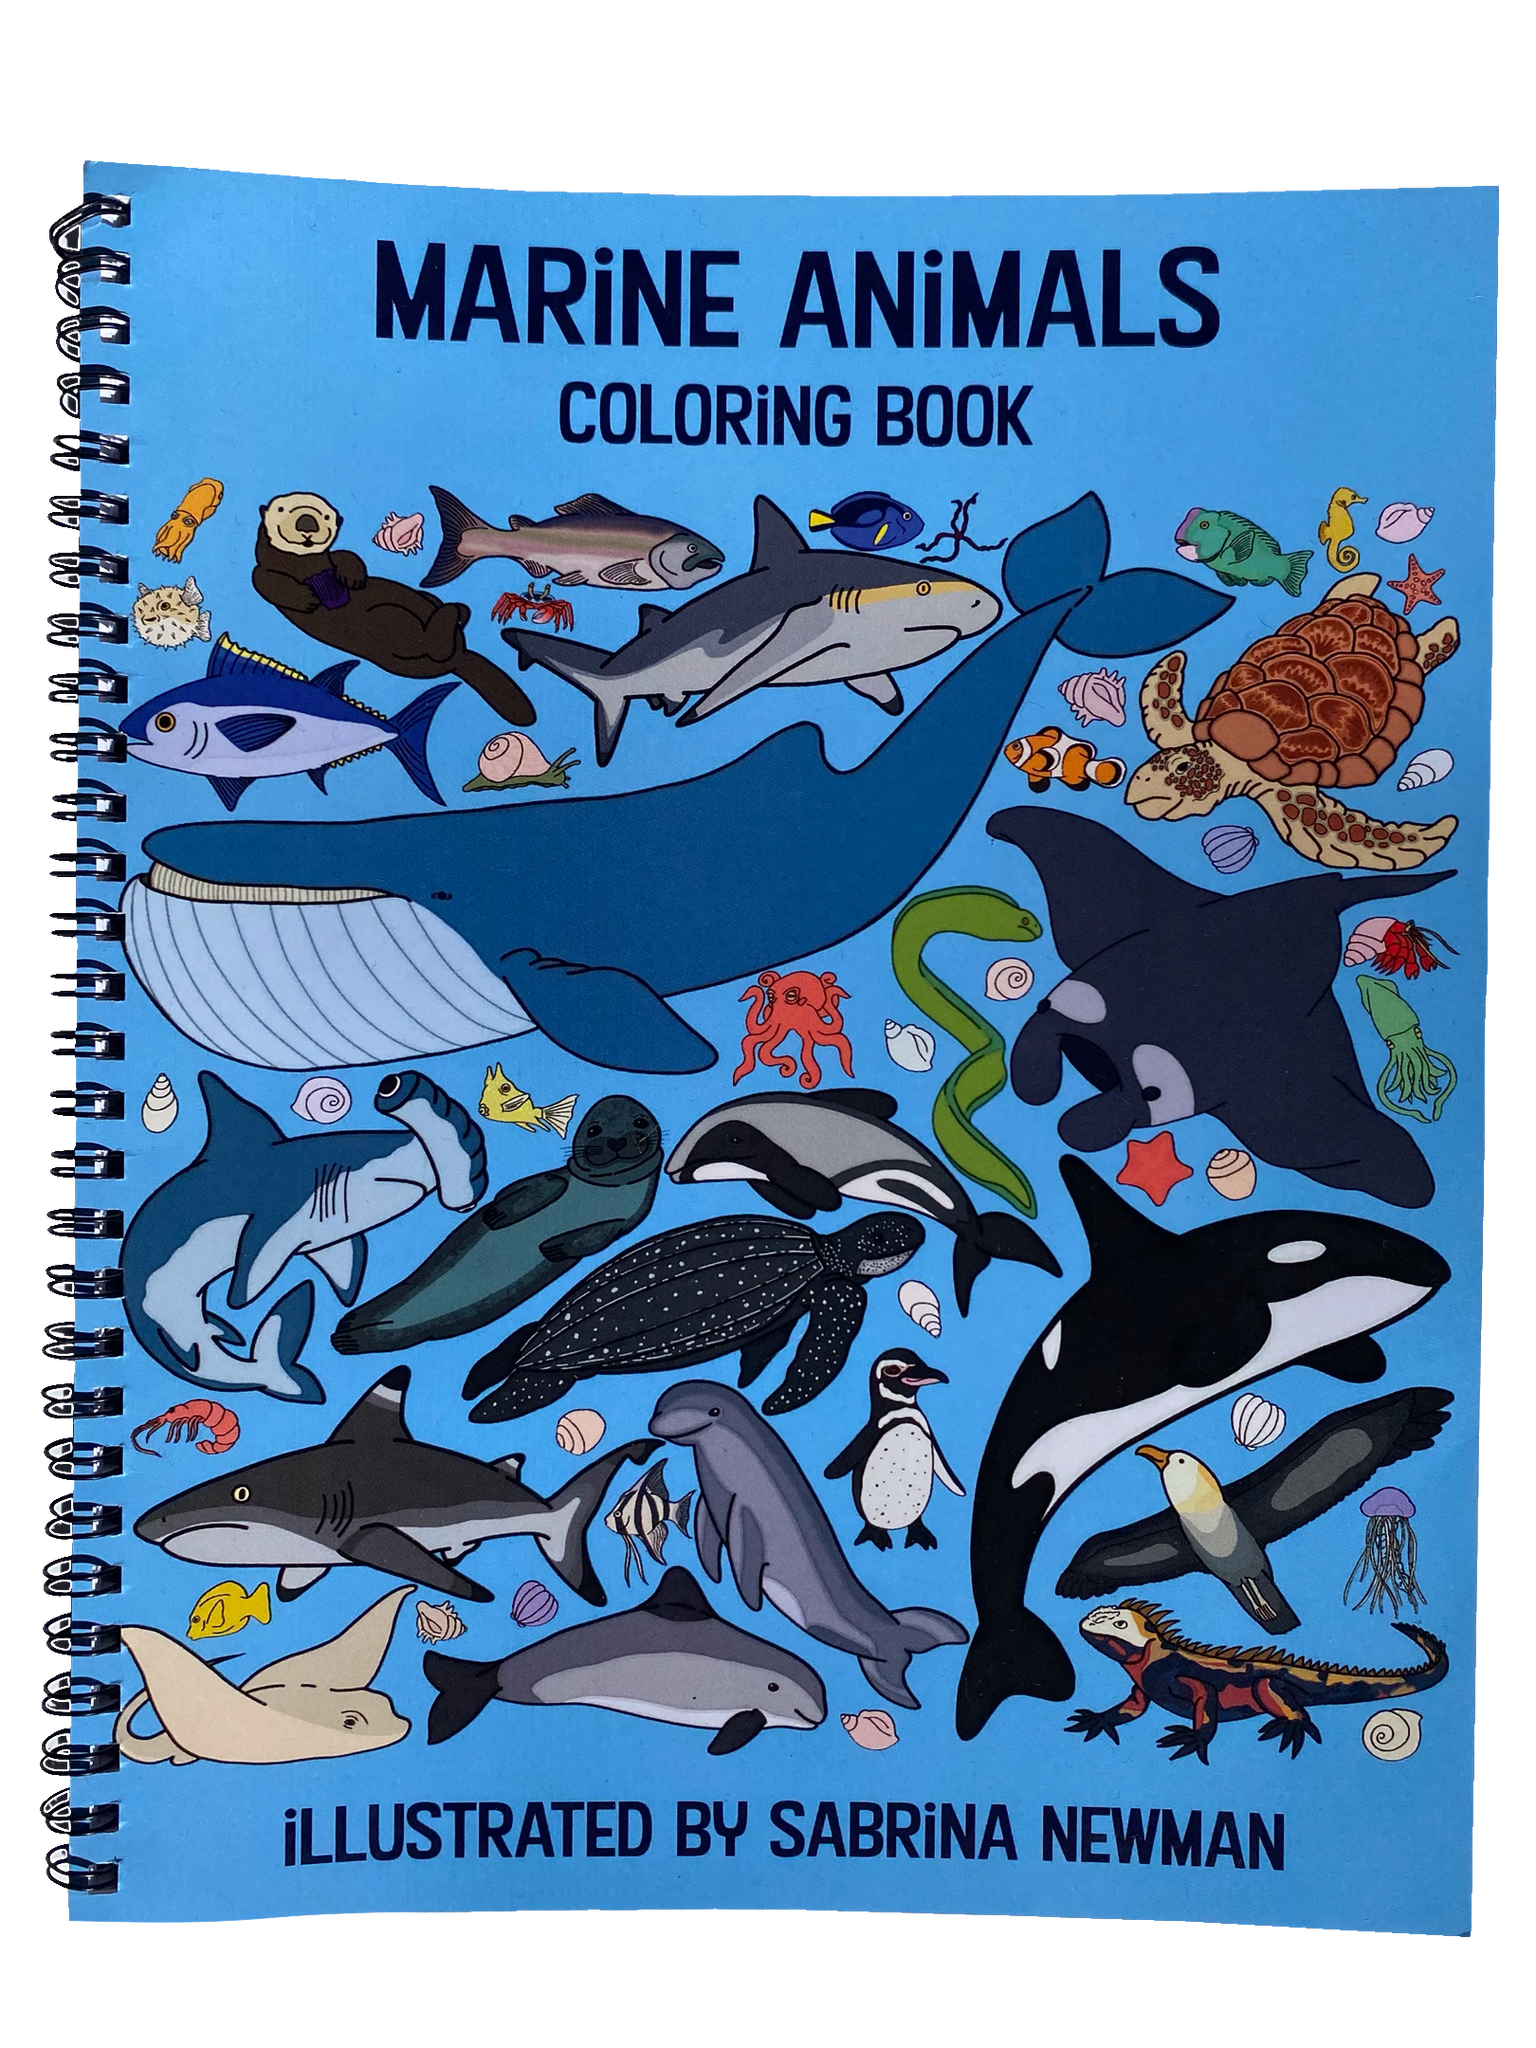 Marine Animals coloring book